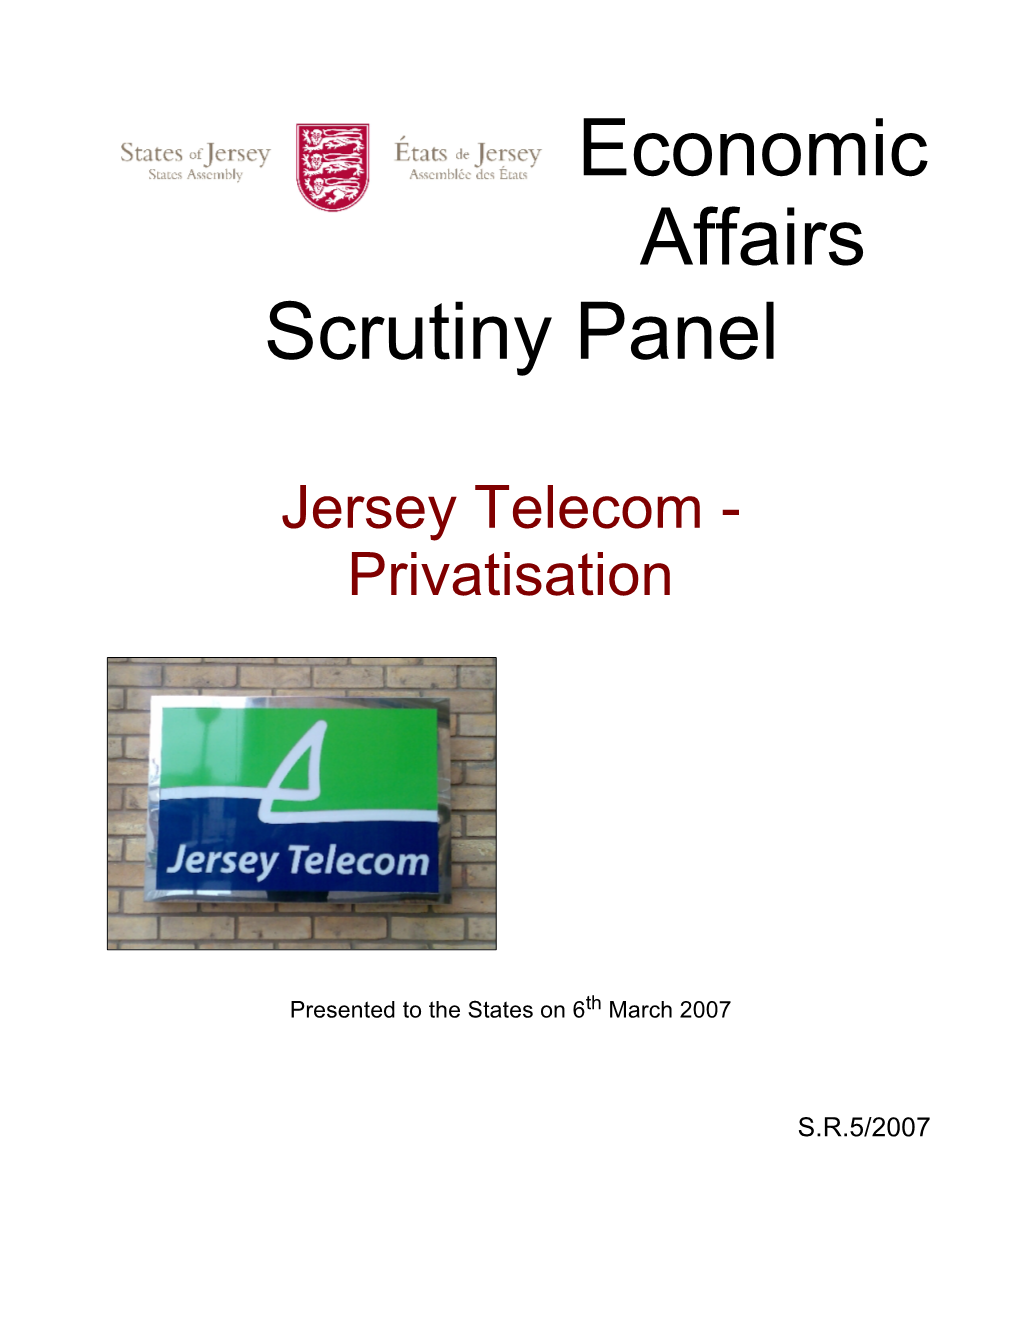 Economic Affairs Panel-Jersey Telecom Privatisation